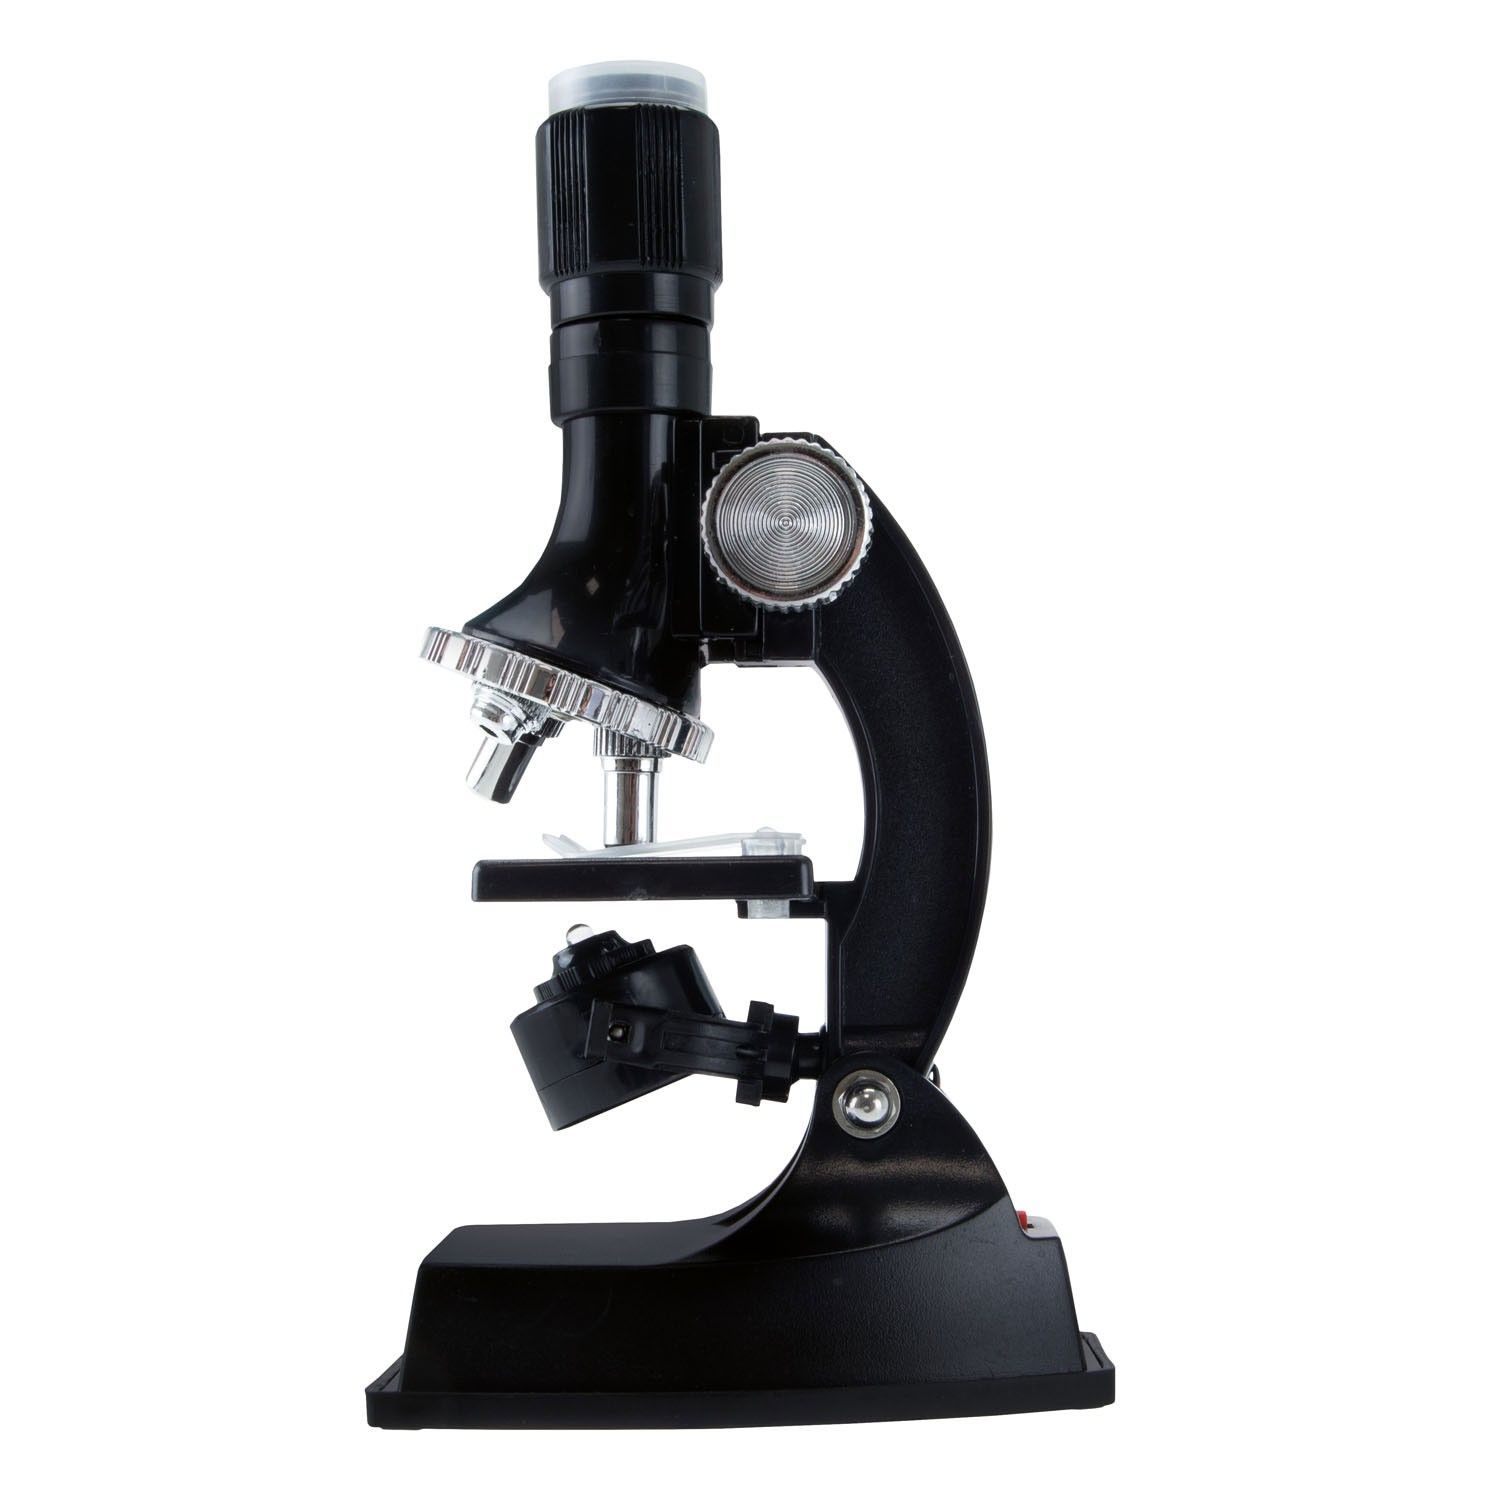 Enfants Microscope Set Creative 1200X Science Microscope Jouet Éducatif 